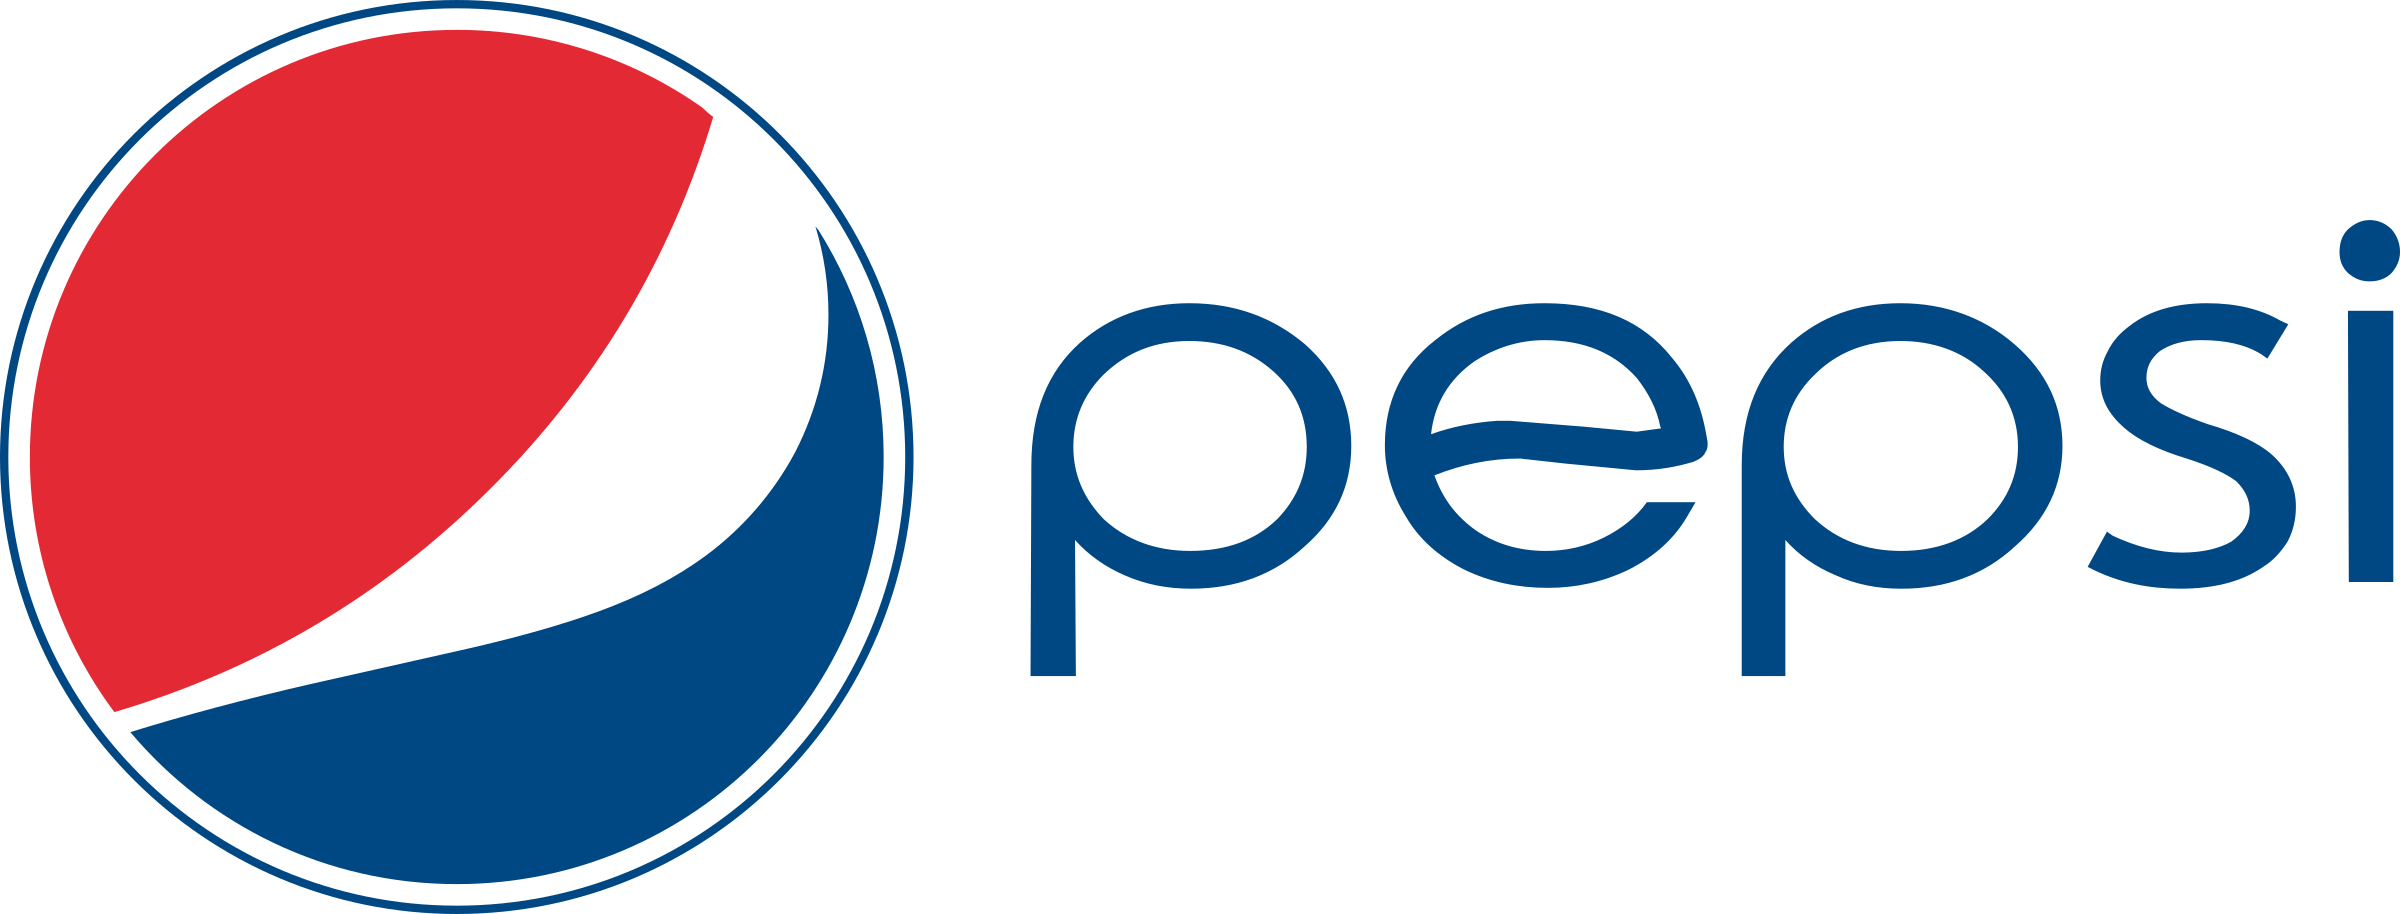 pepsi-logo.png